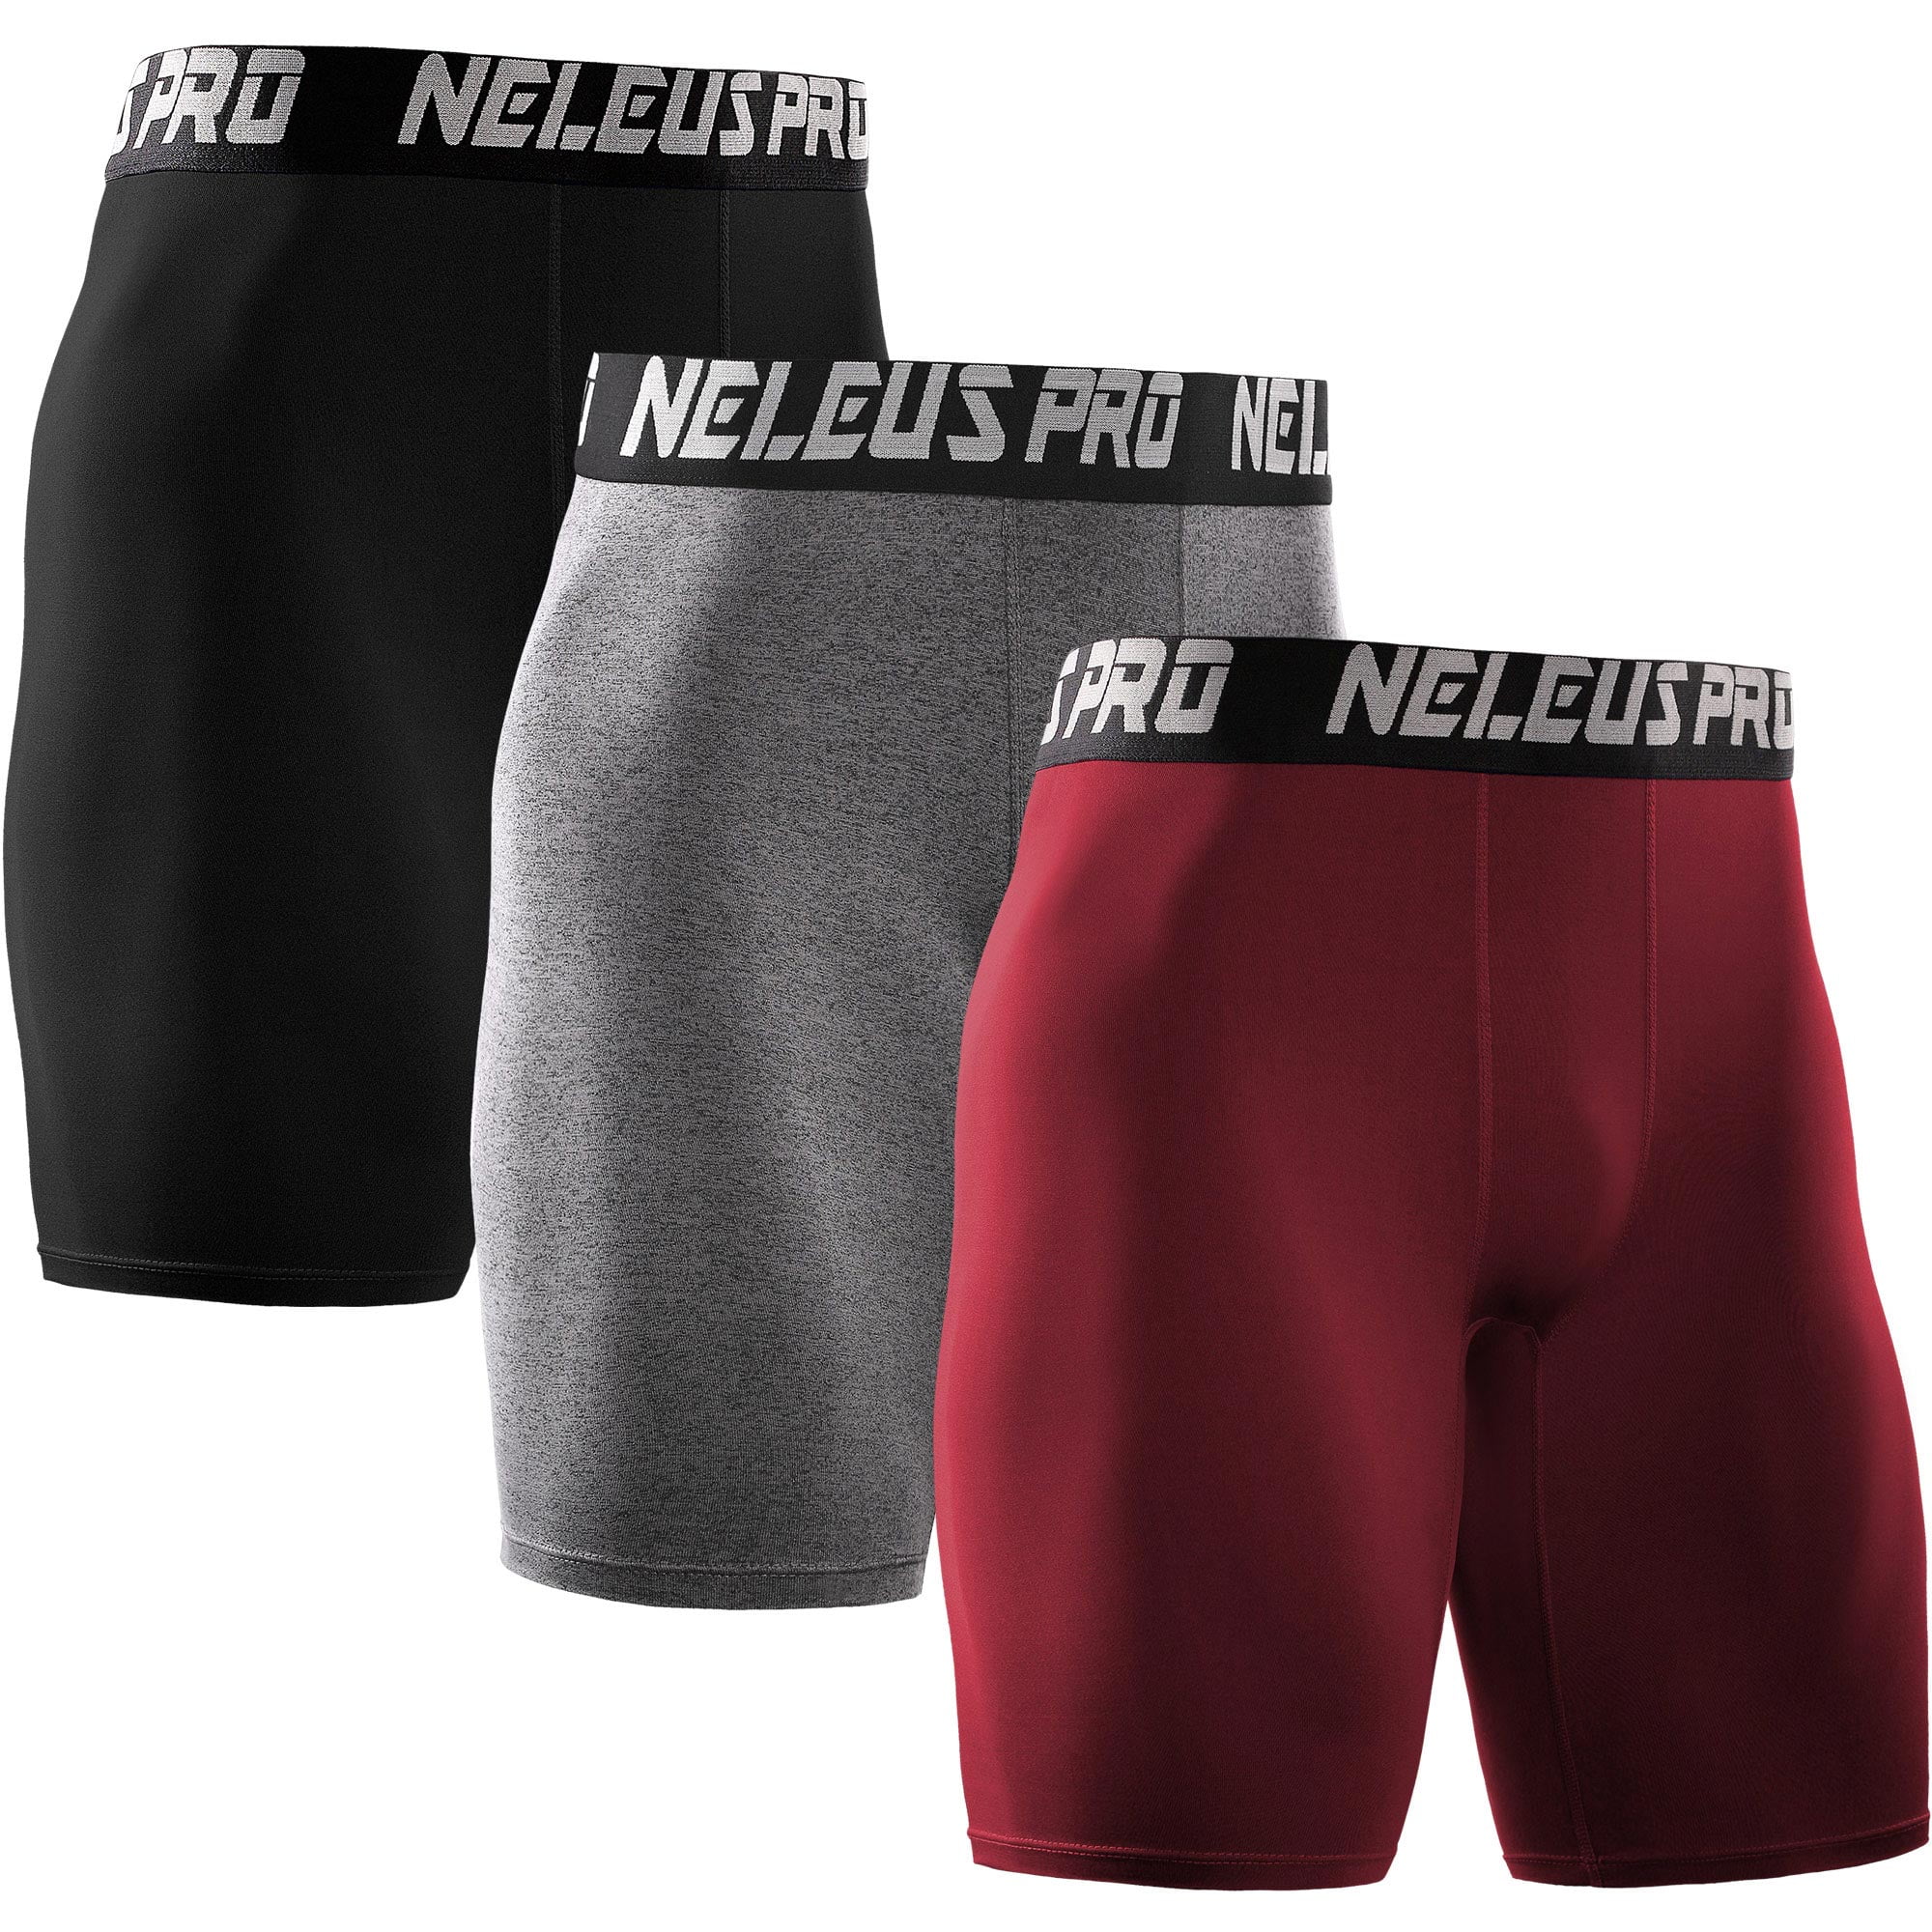 NBA_ New York Men Knick 2020/21 City Swingman Pants Edition Performance  Basketball Shorts''nba''jersey 